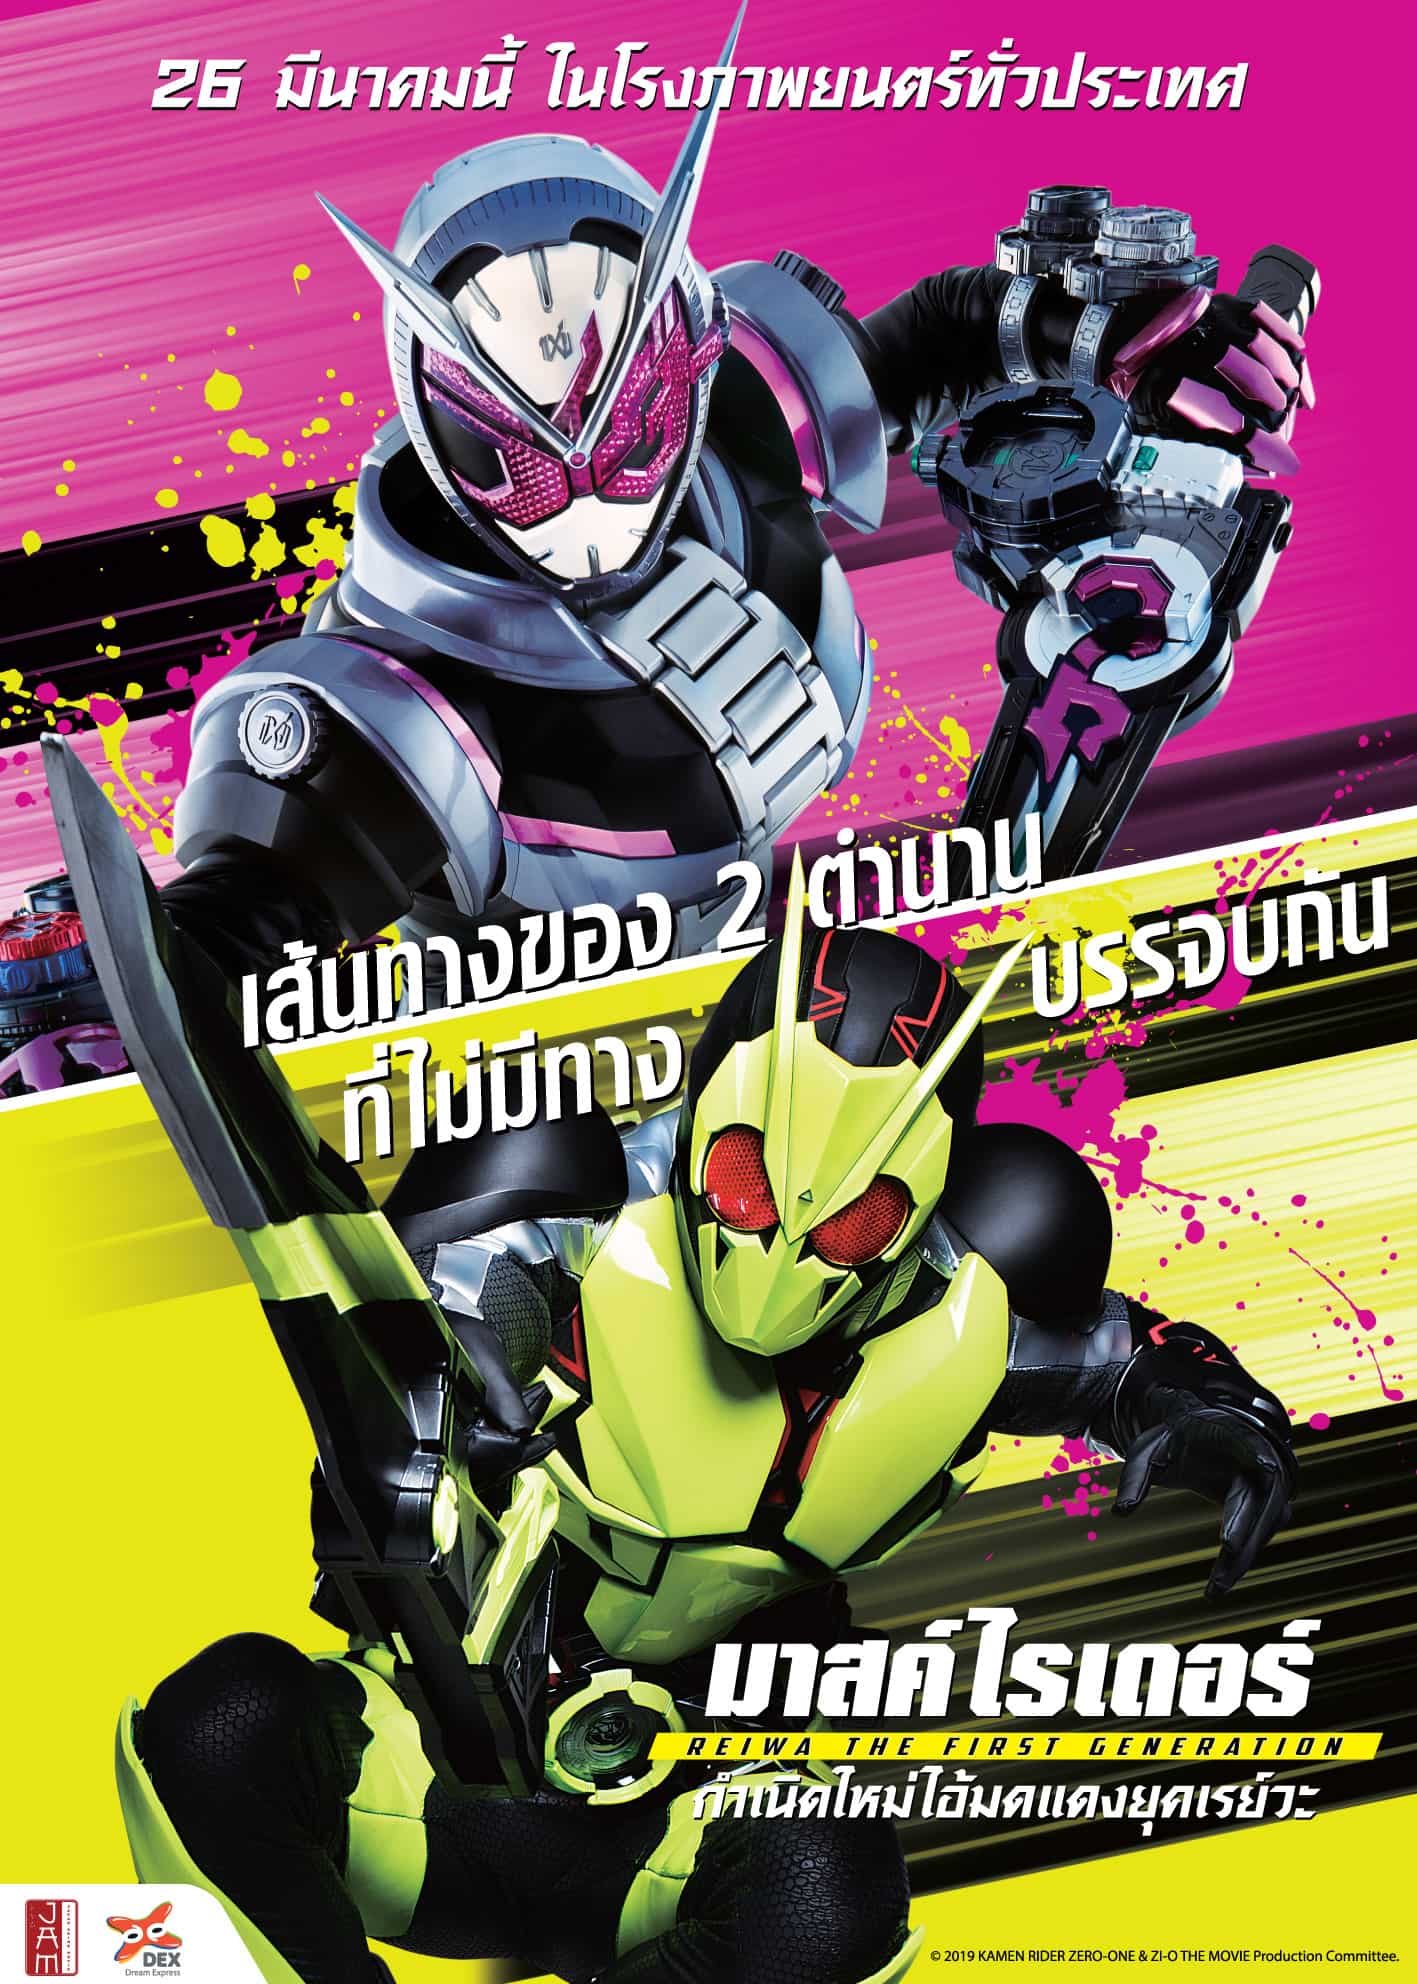 Kamen-Rider-Reiwa-The-First-Generation-2019-มาสค์ไรเดอร์-กำเนิดใหม่ไอ้มดแดงยุคเรวะ-พากย์ไทย-min